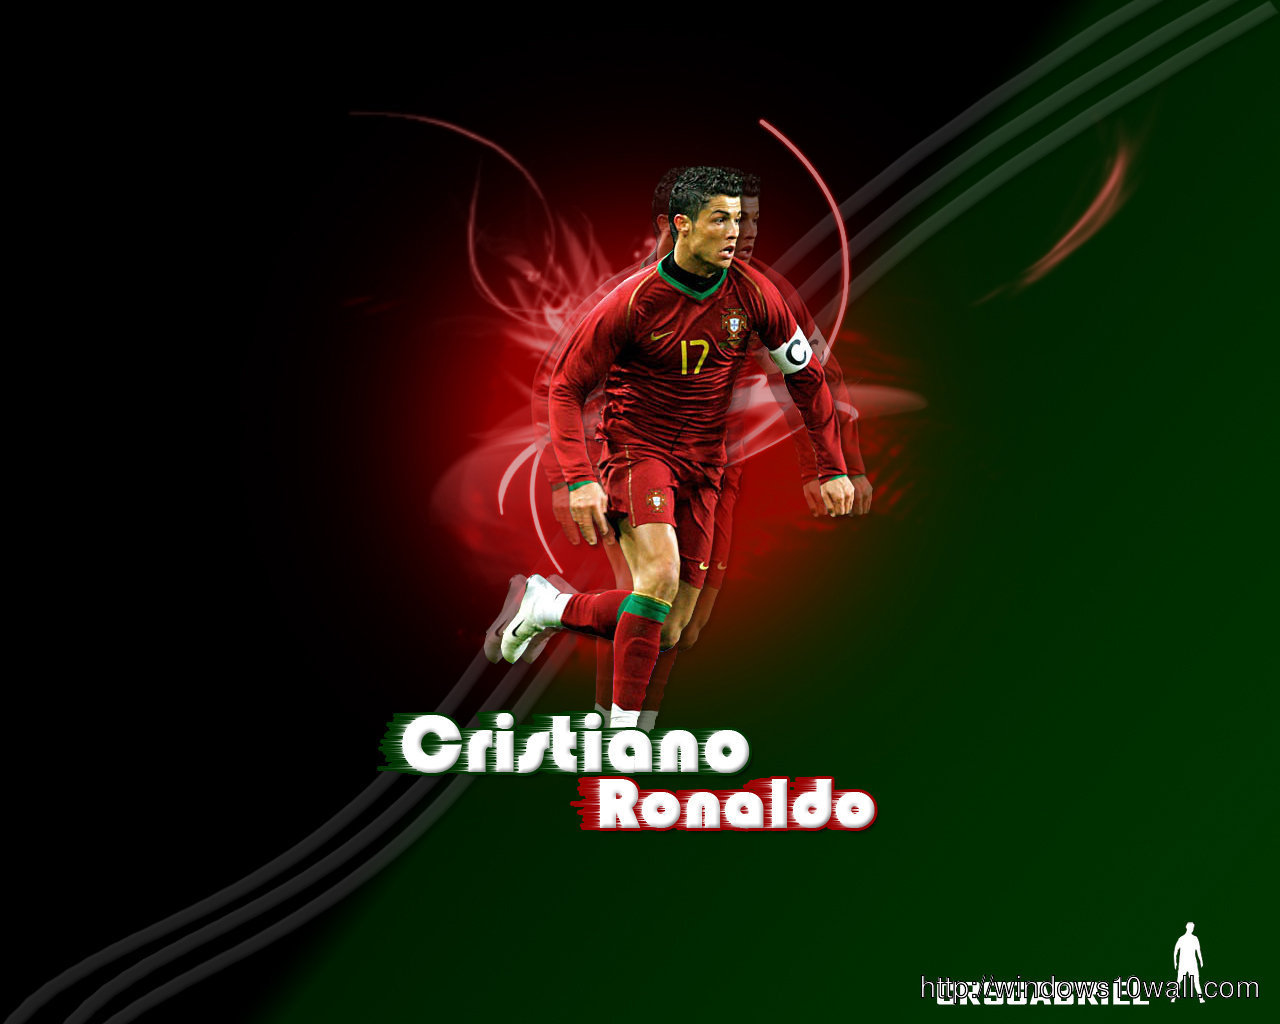 Cristiano Ronaldo Portugal Football Federation Hd Wallpaper